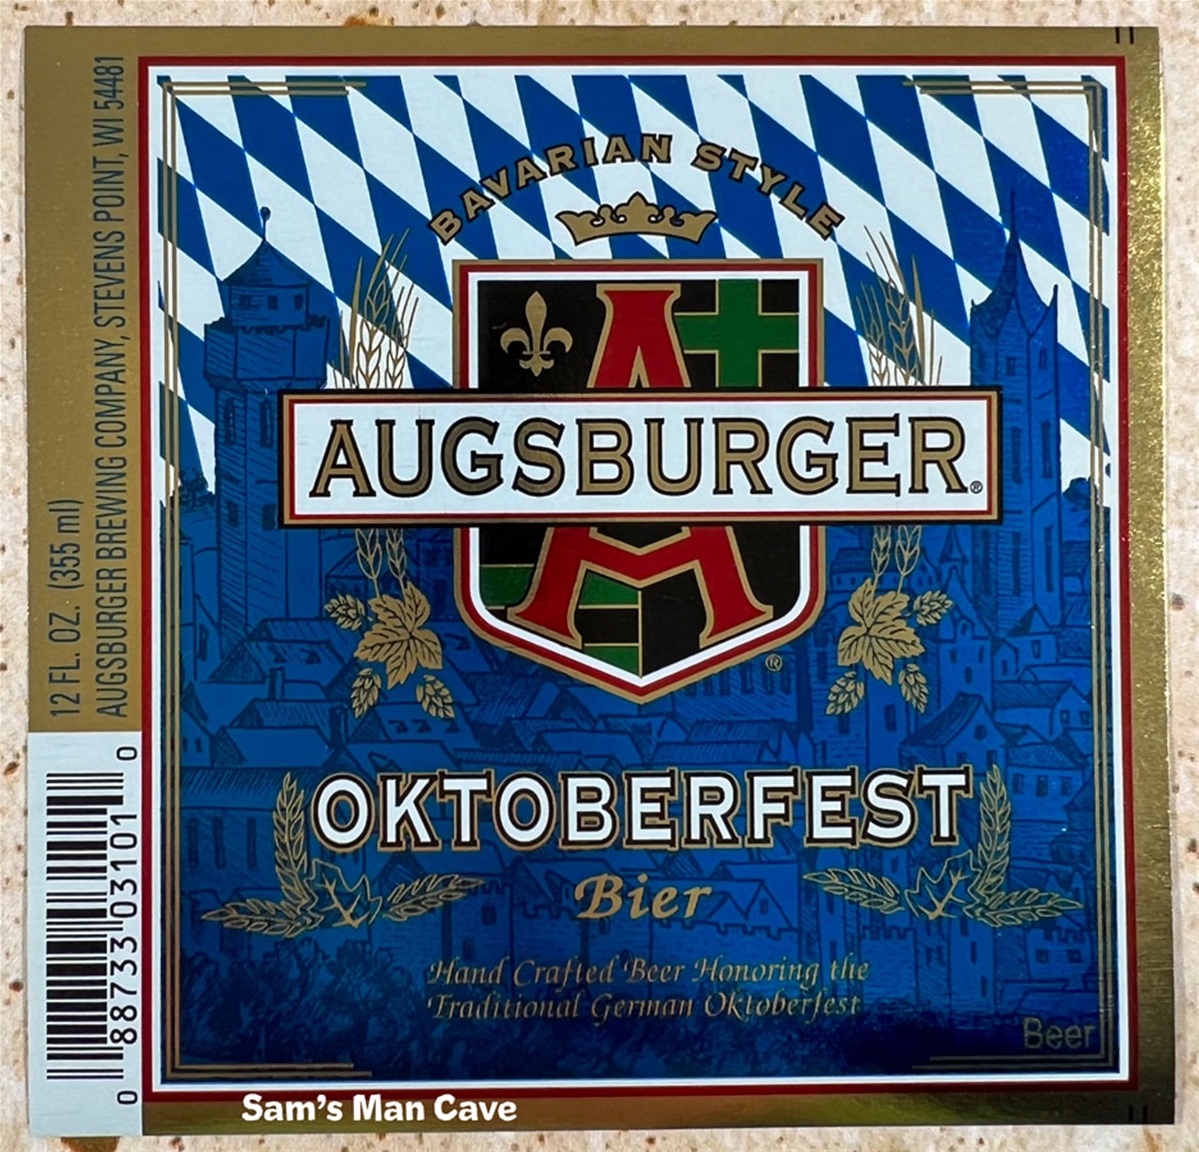 Augsburger Oktoberfest Bier Label